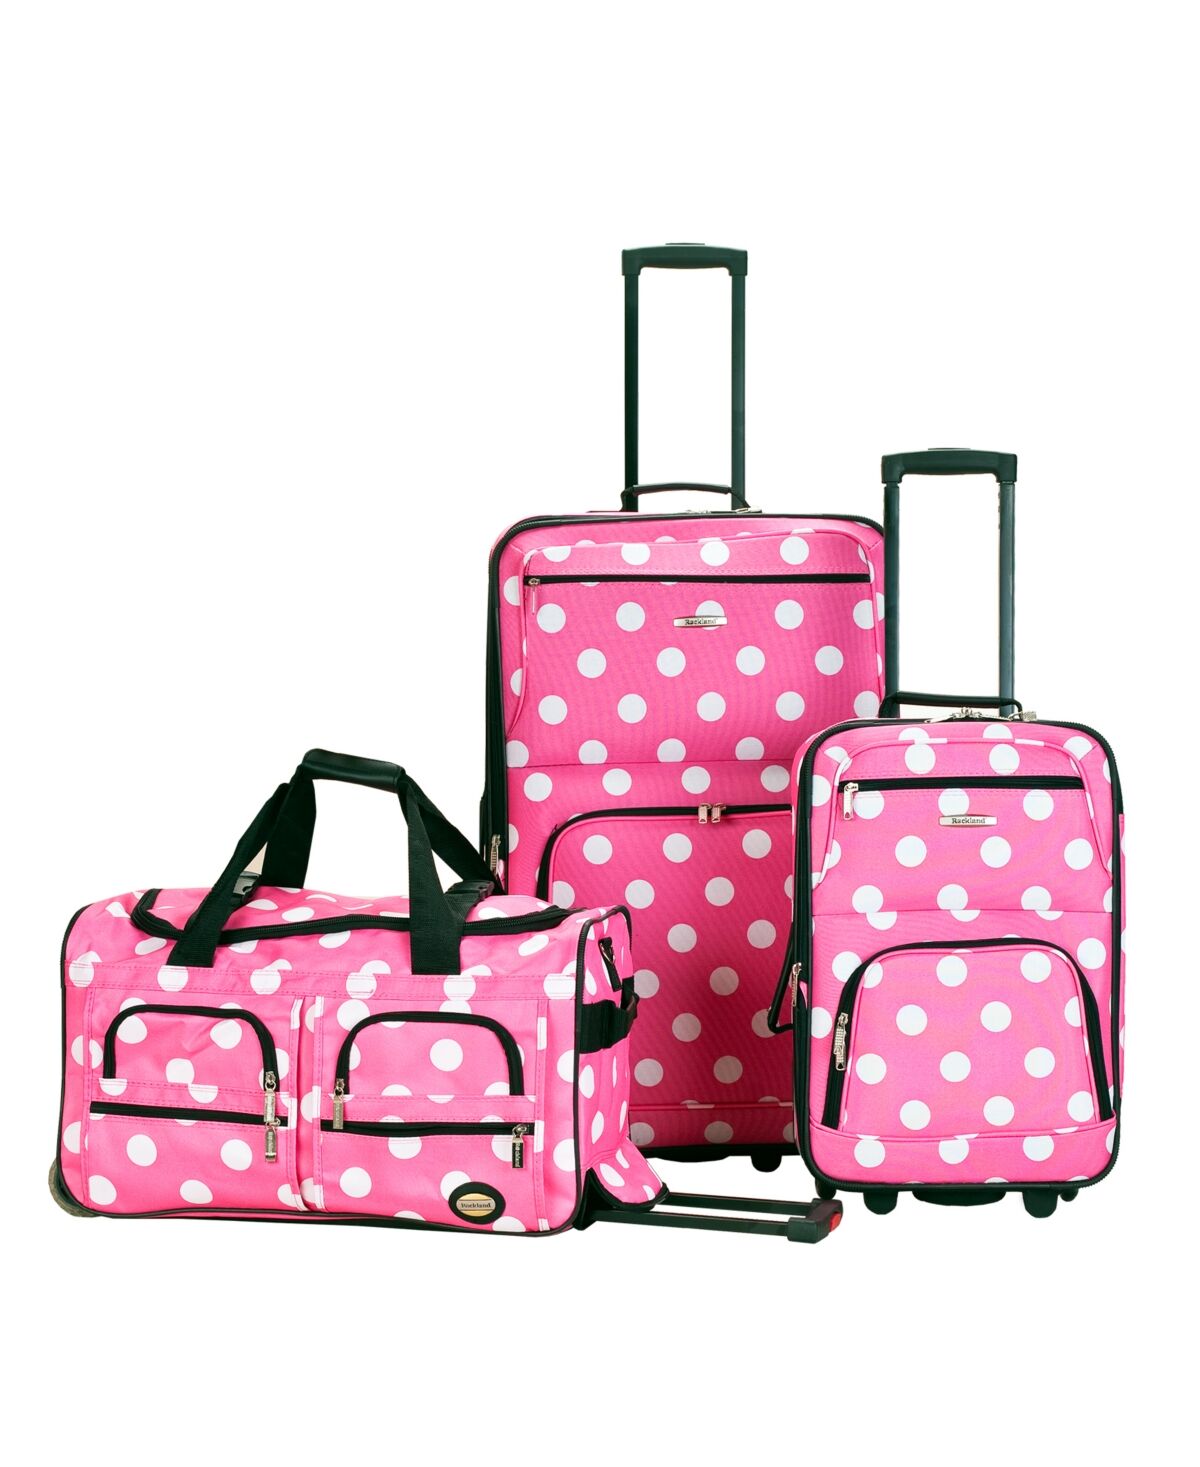 Rockland 3-Pc. Softside Luggage Set - Pink Dots